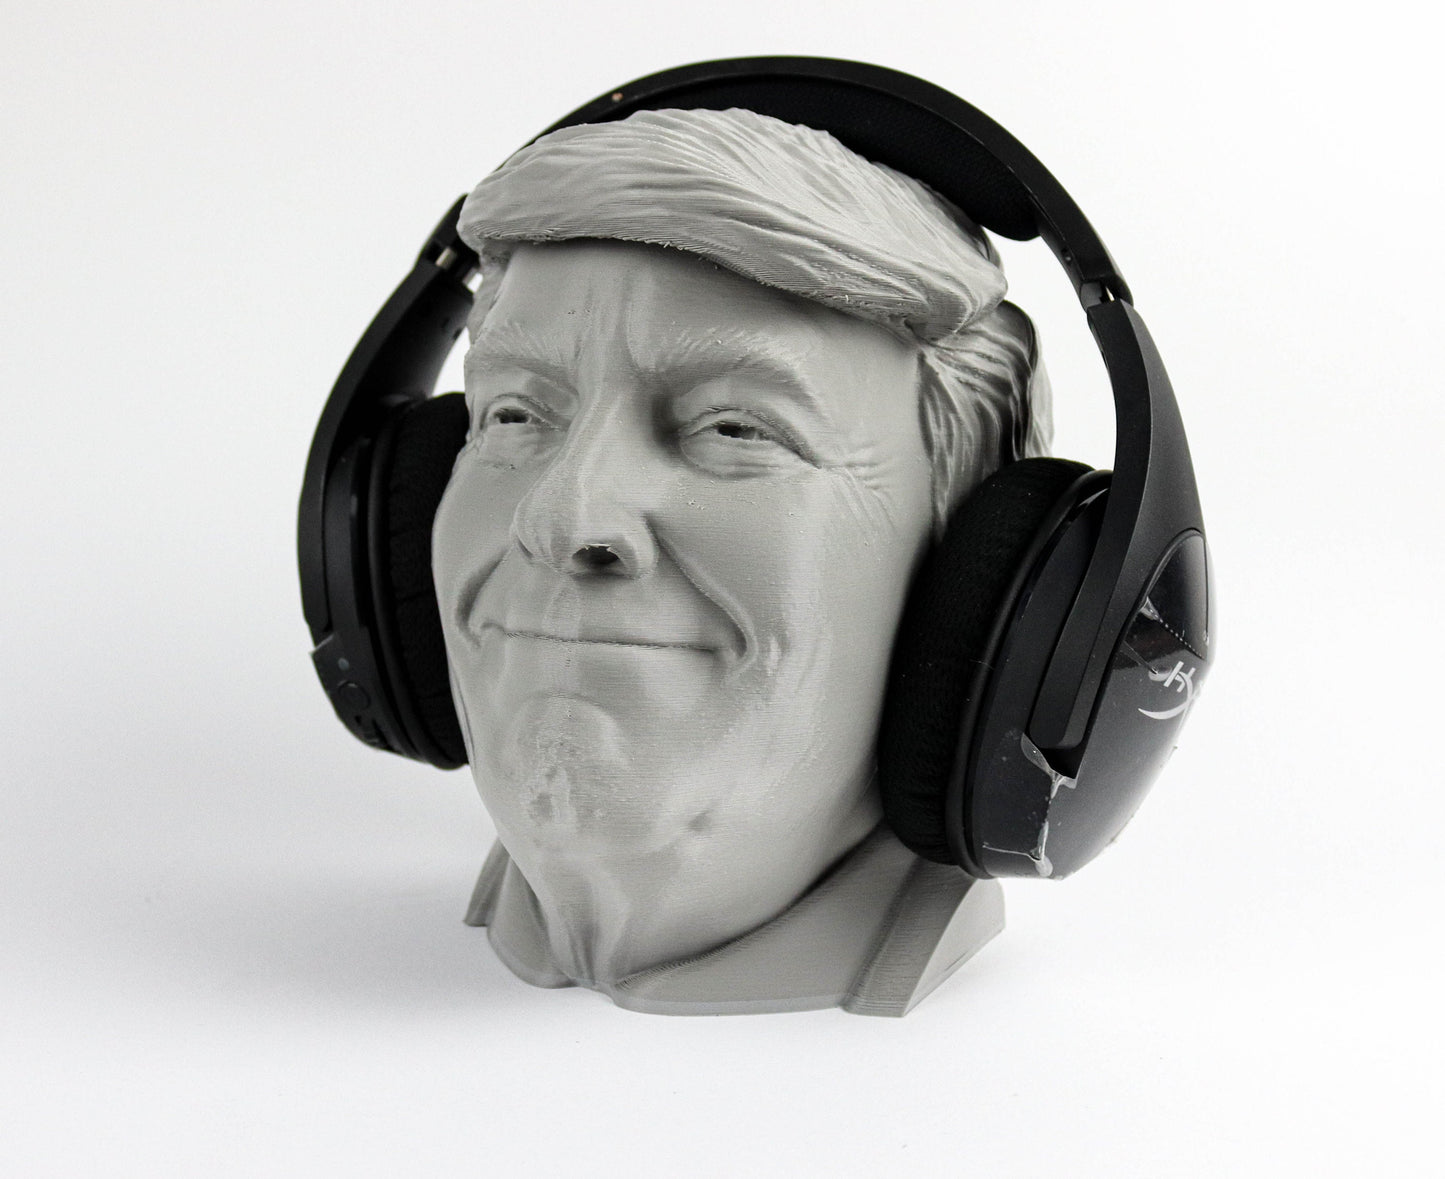 Smiling Trump Headphone Holder 3d Bust